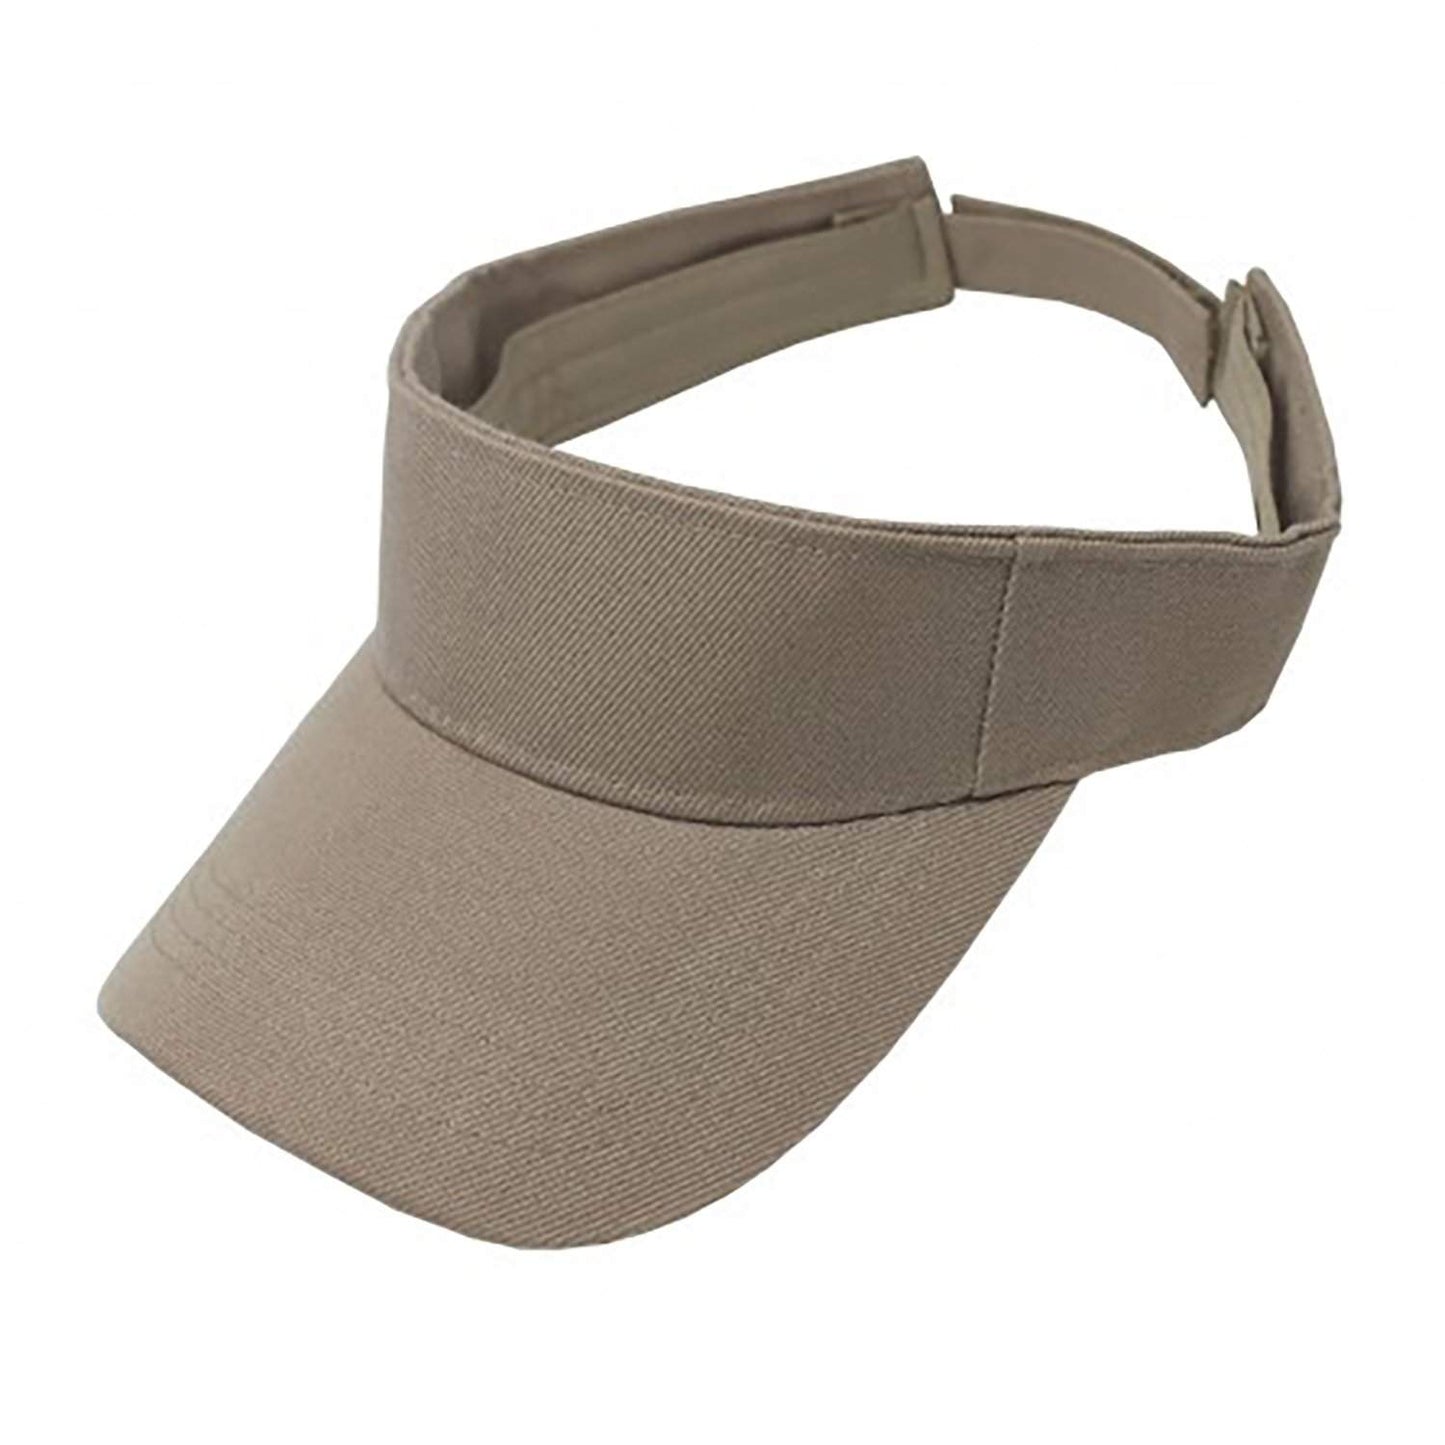 Qraftsy Sun Visor Adjustable Cap Hat Athletic Wear